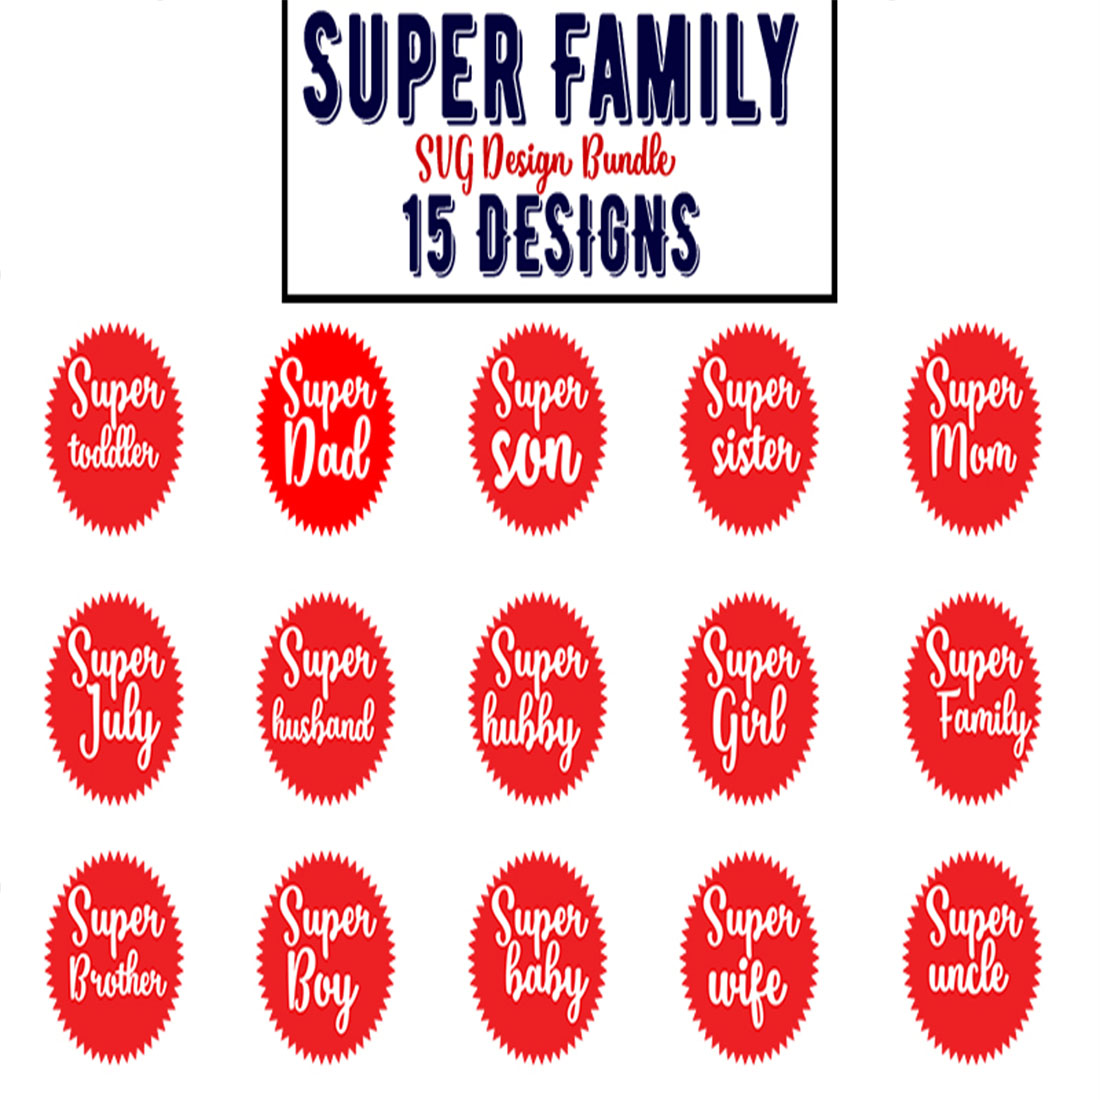 Super Family SVG Bundle preview image.